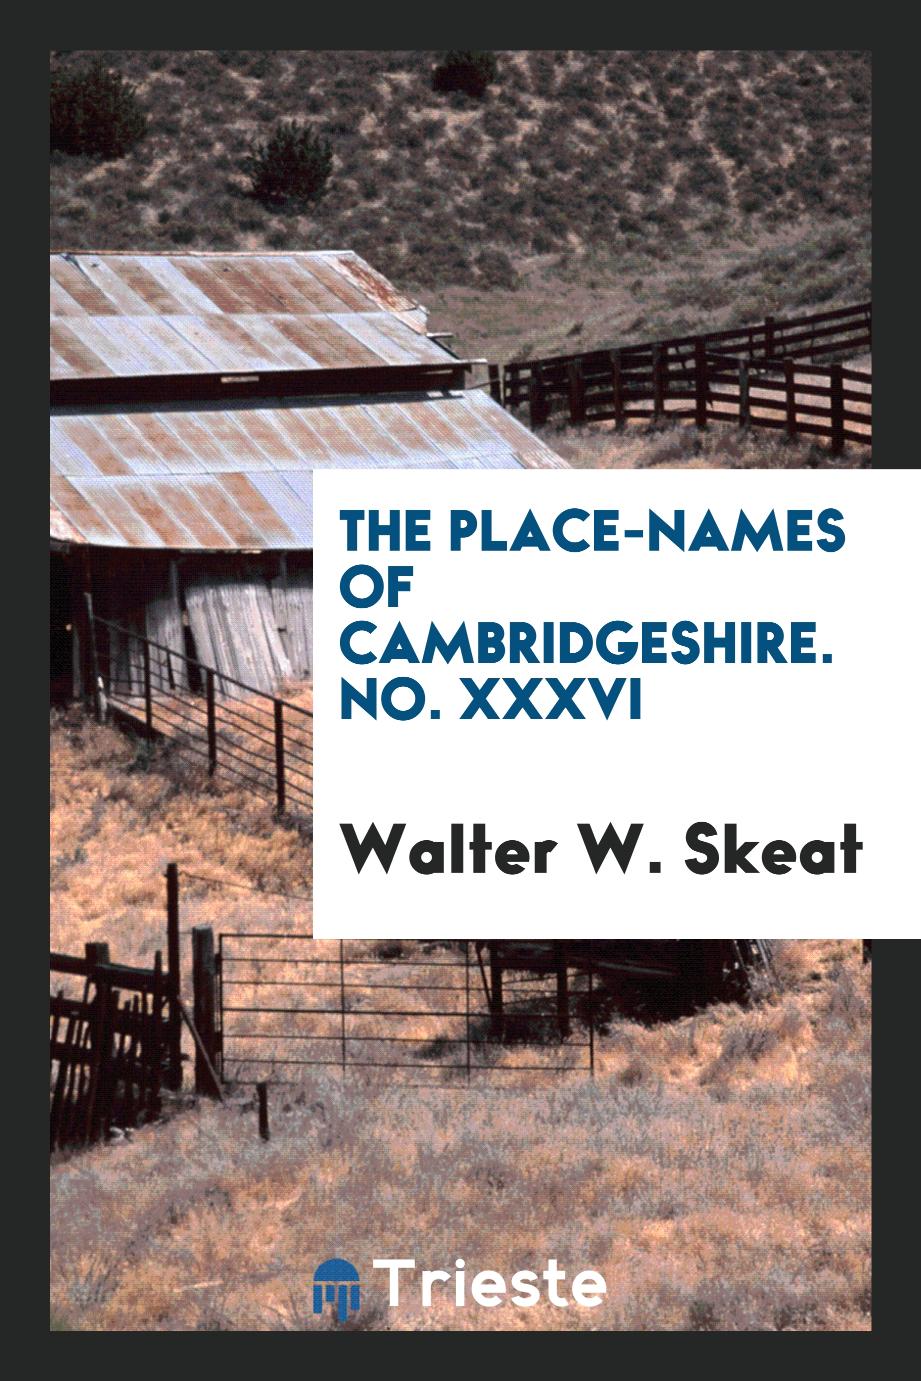 The Place-names of Cambridgeshire. No. XXXVI